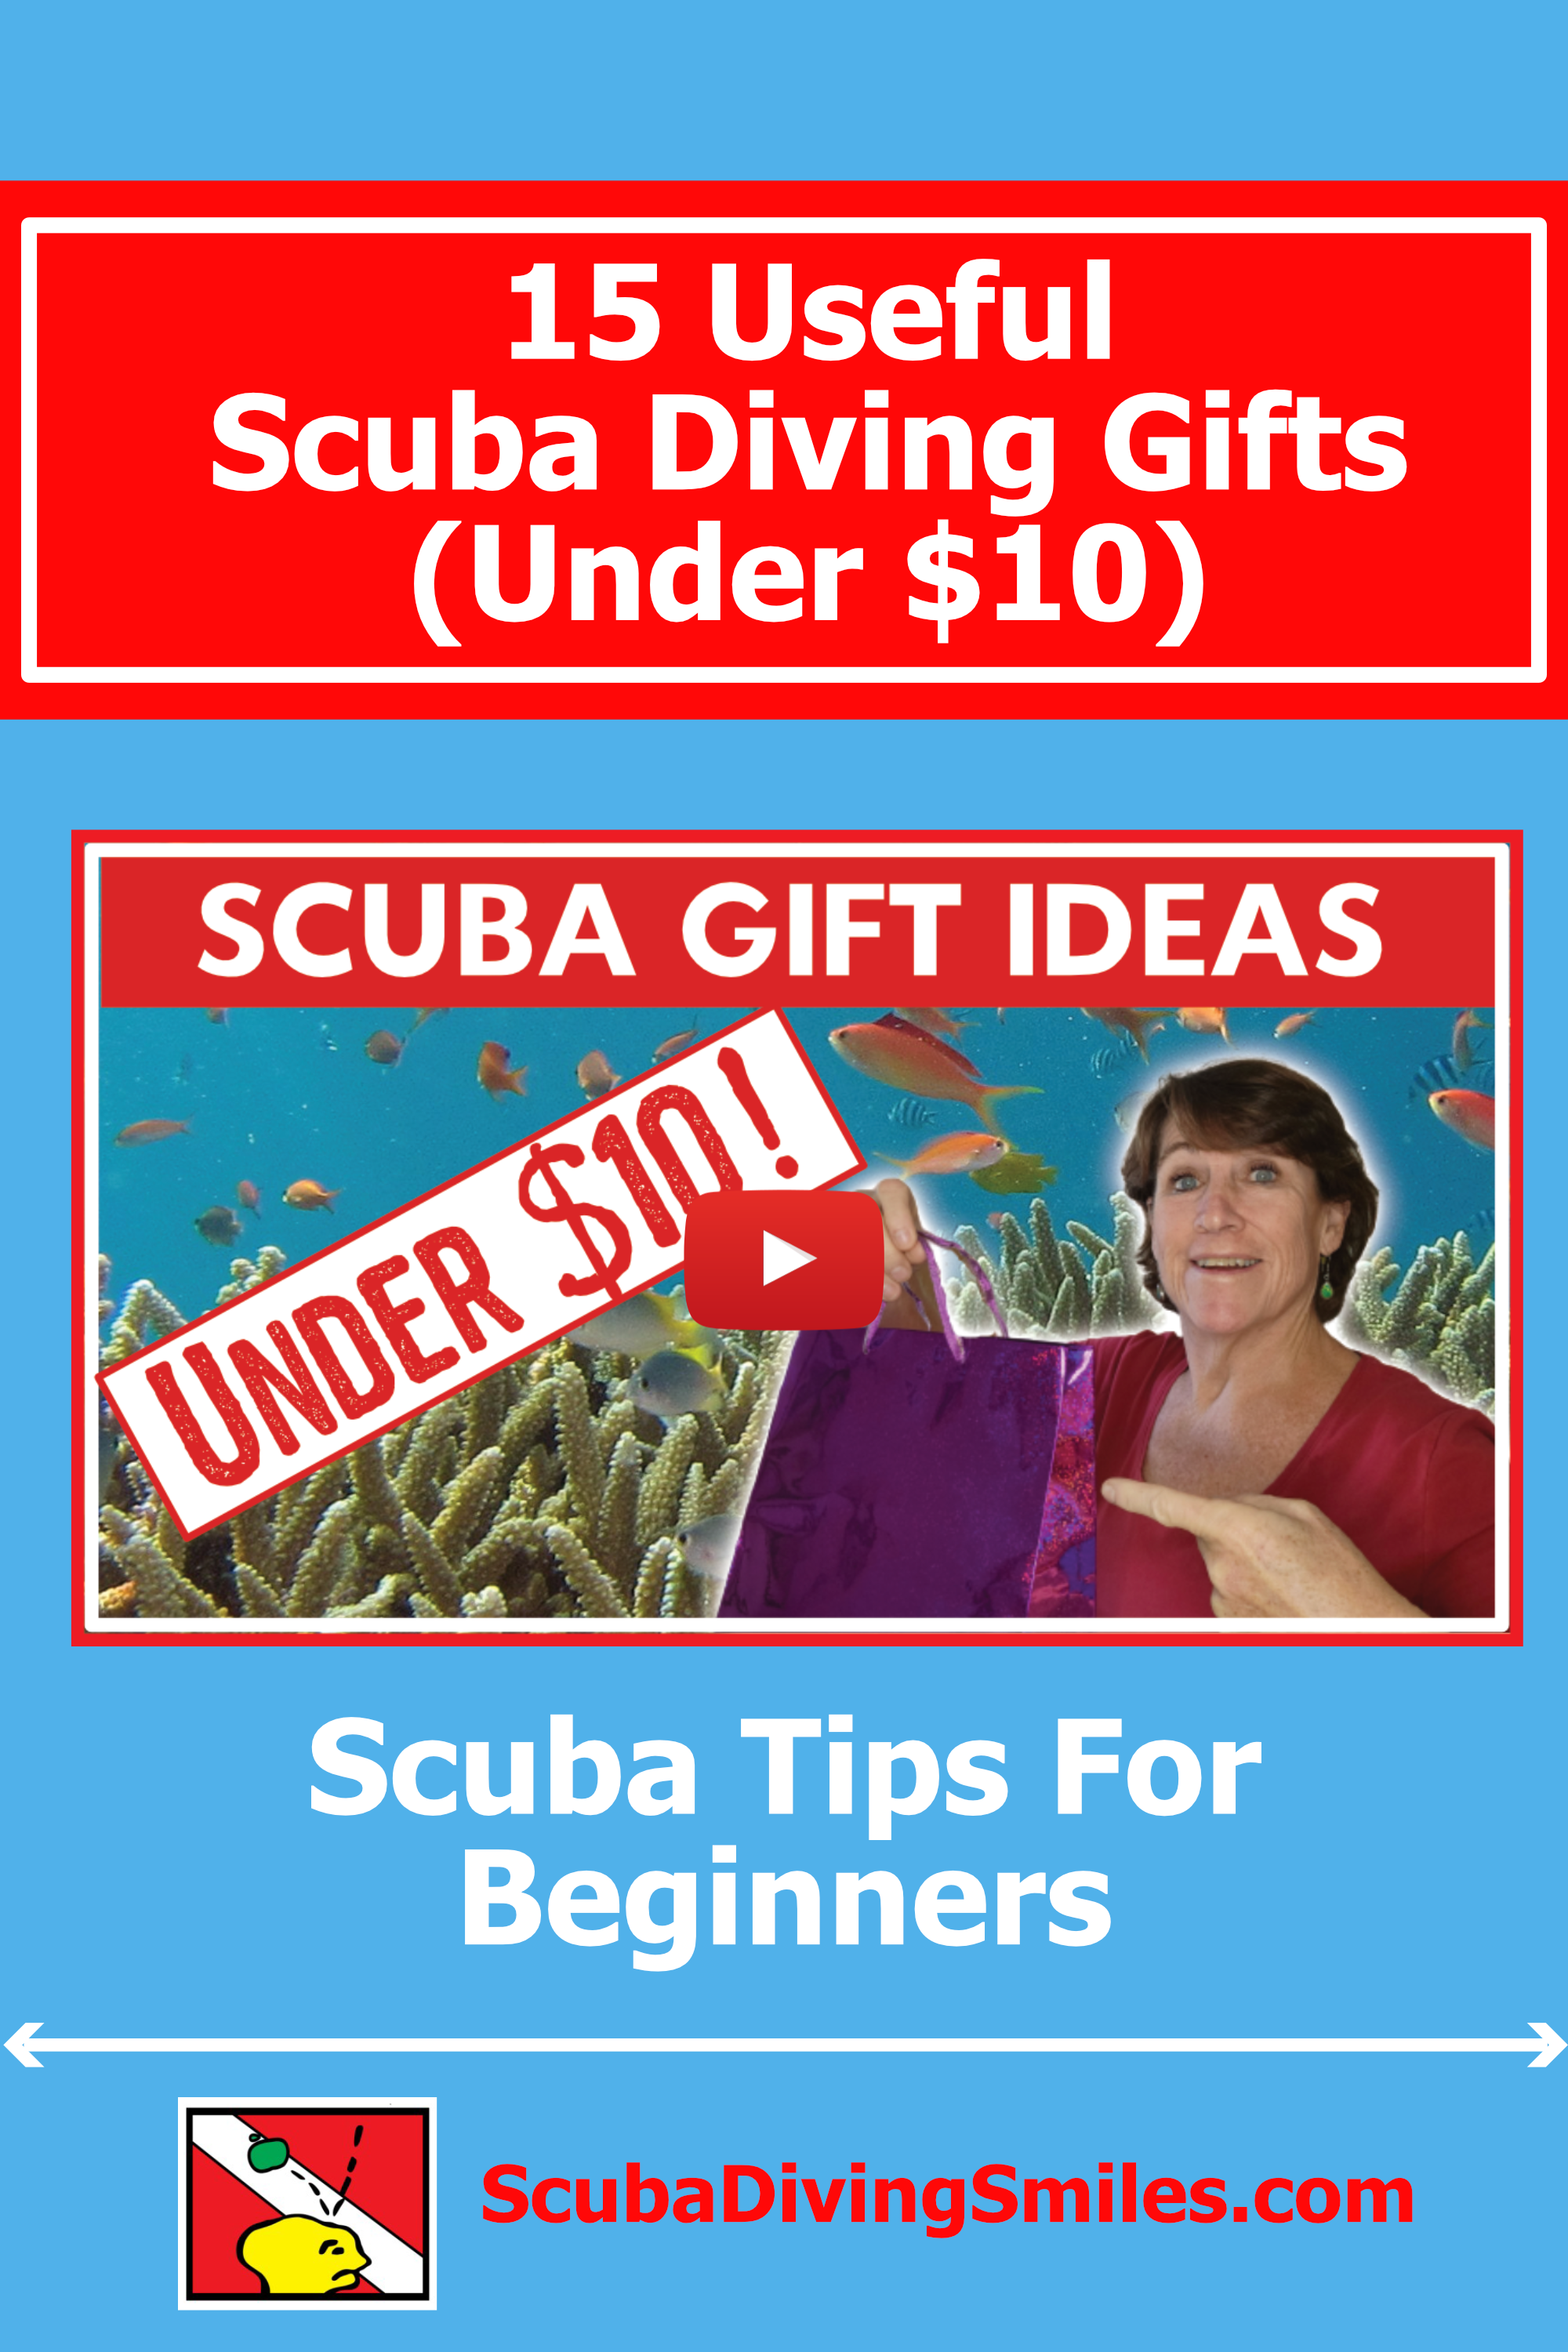 https://www.scuba-diving-smiles.com/images/video18giftsunder10.png